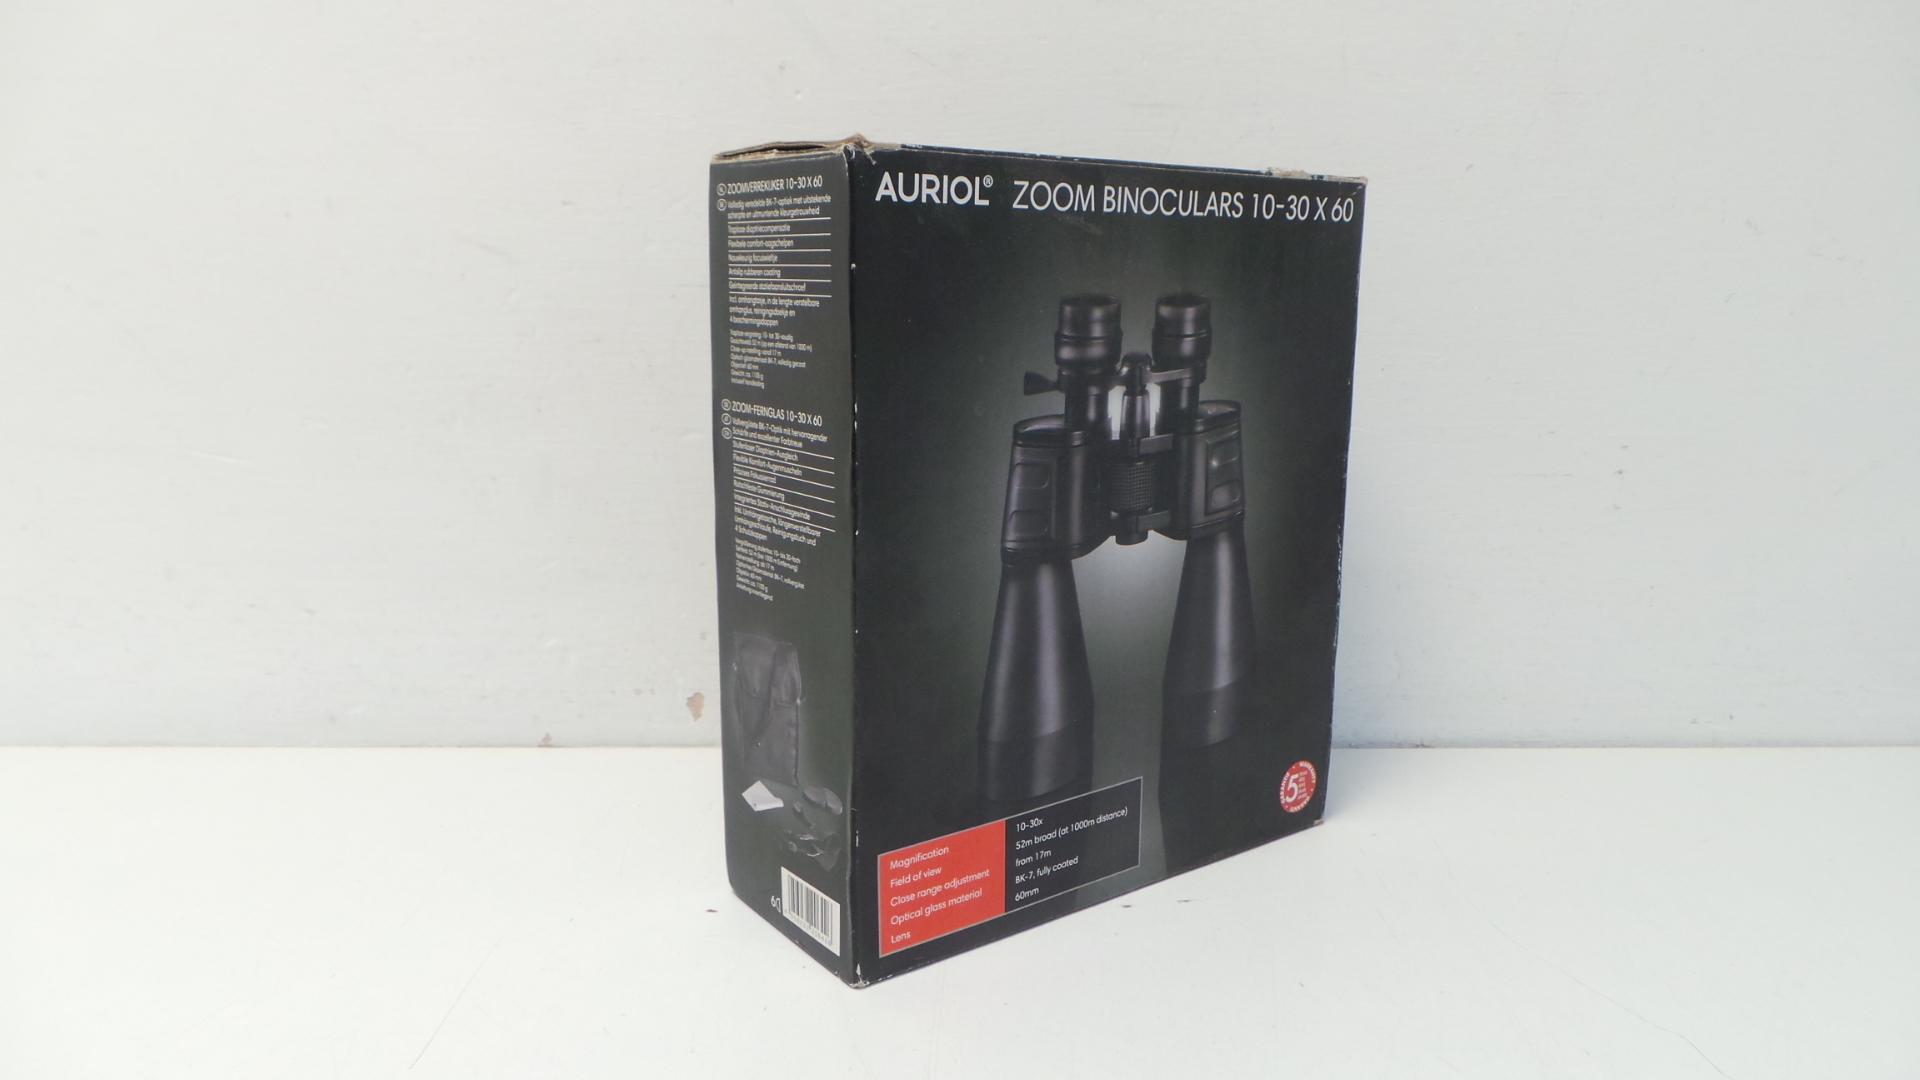 10-30 Binoculars Zoom Auriol 60 x